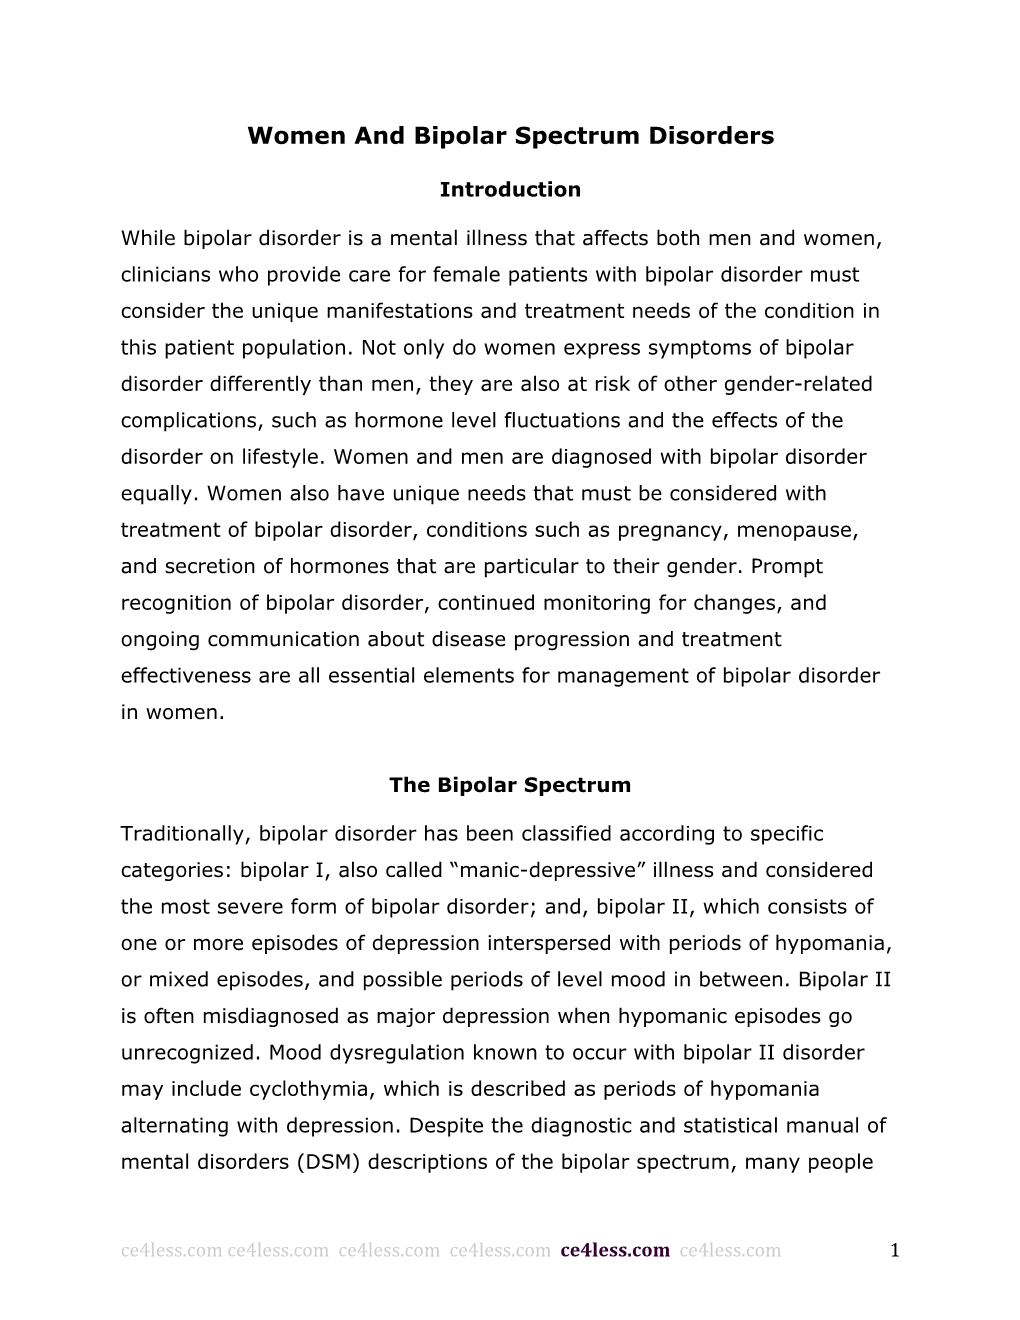 Women and Bipolar Spectrum Disorders